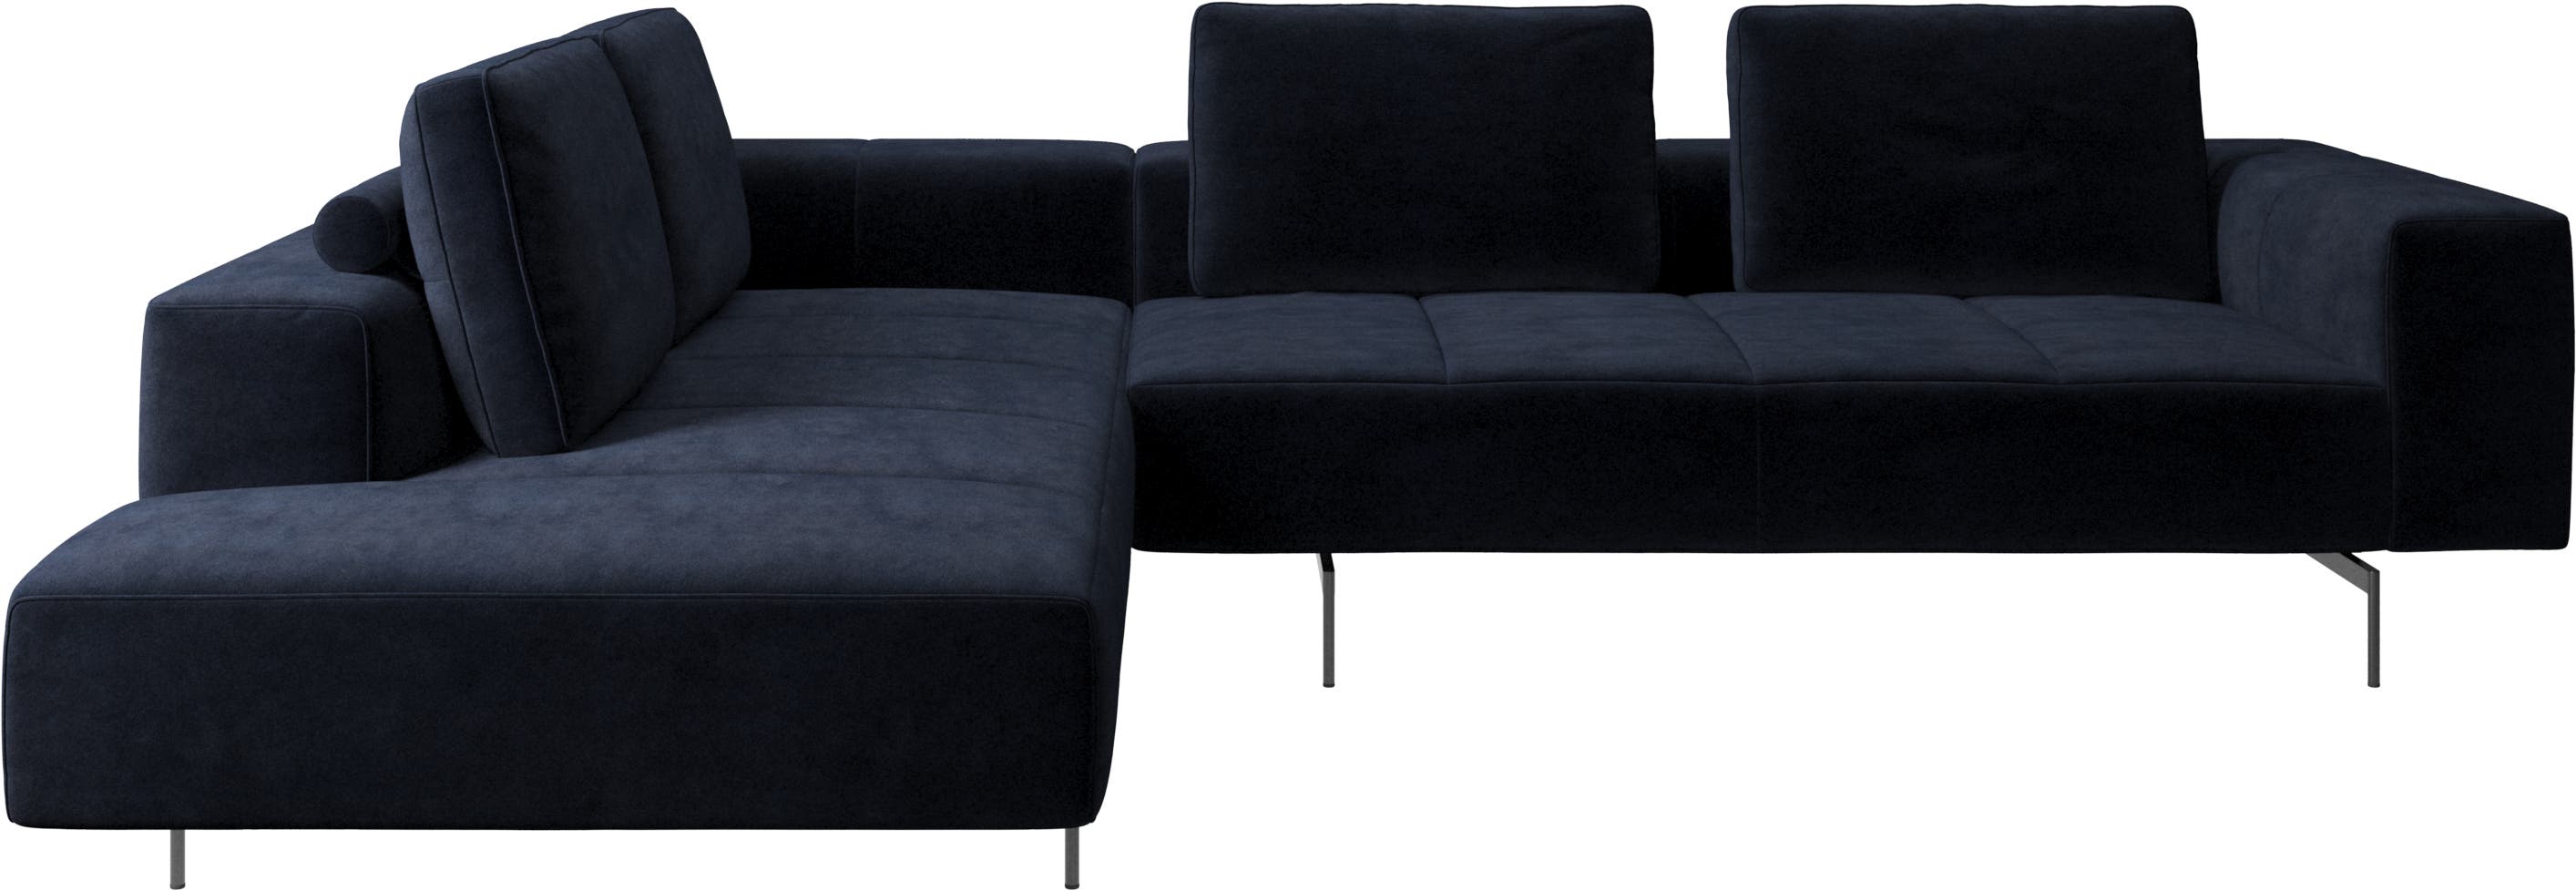 Amsterdam corner sofa with lounging unit